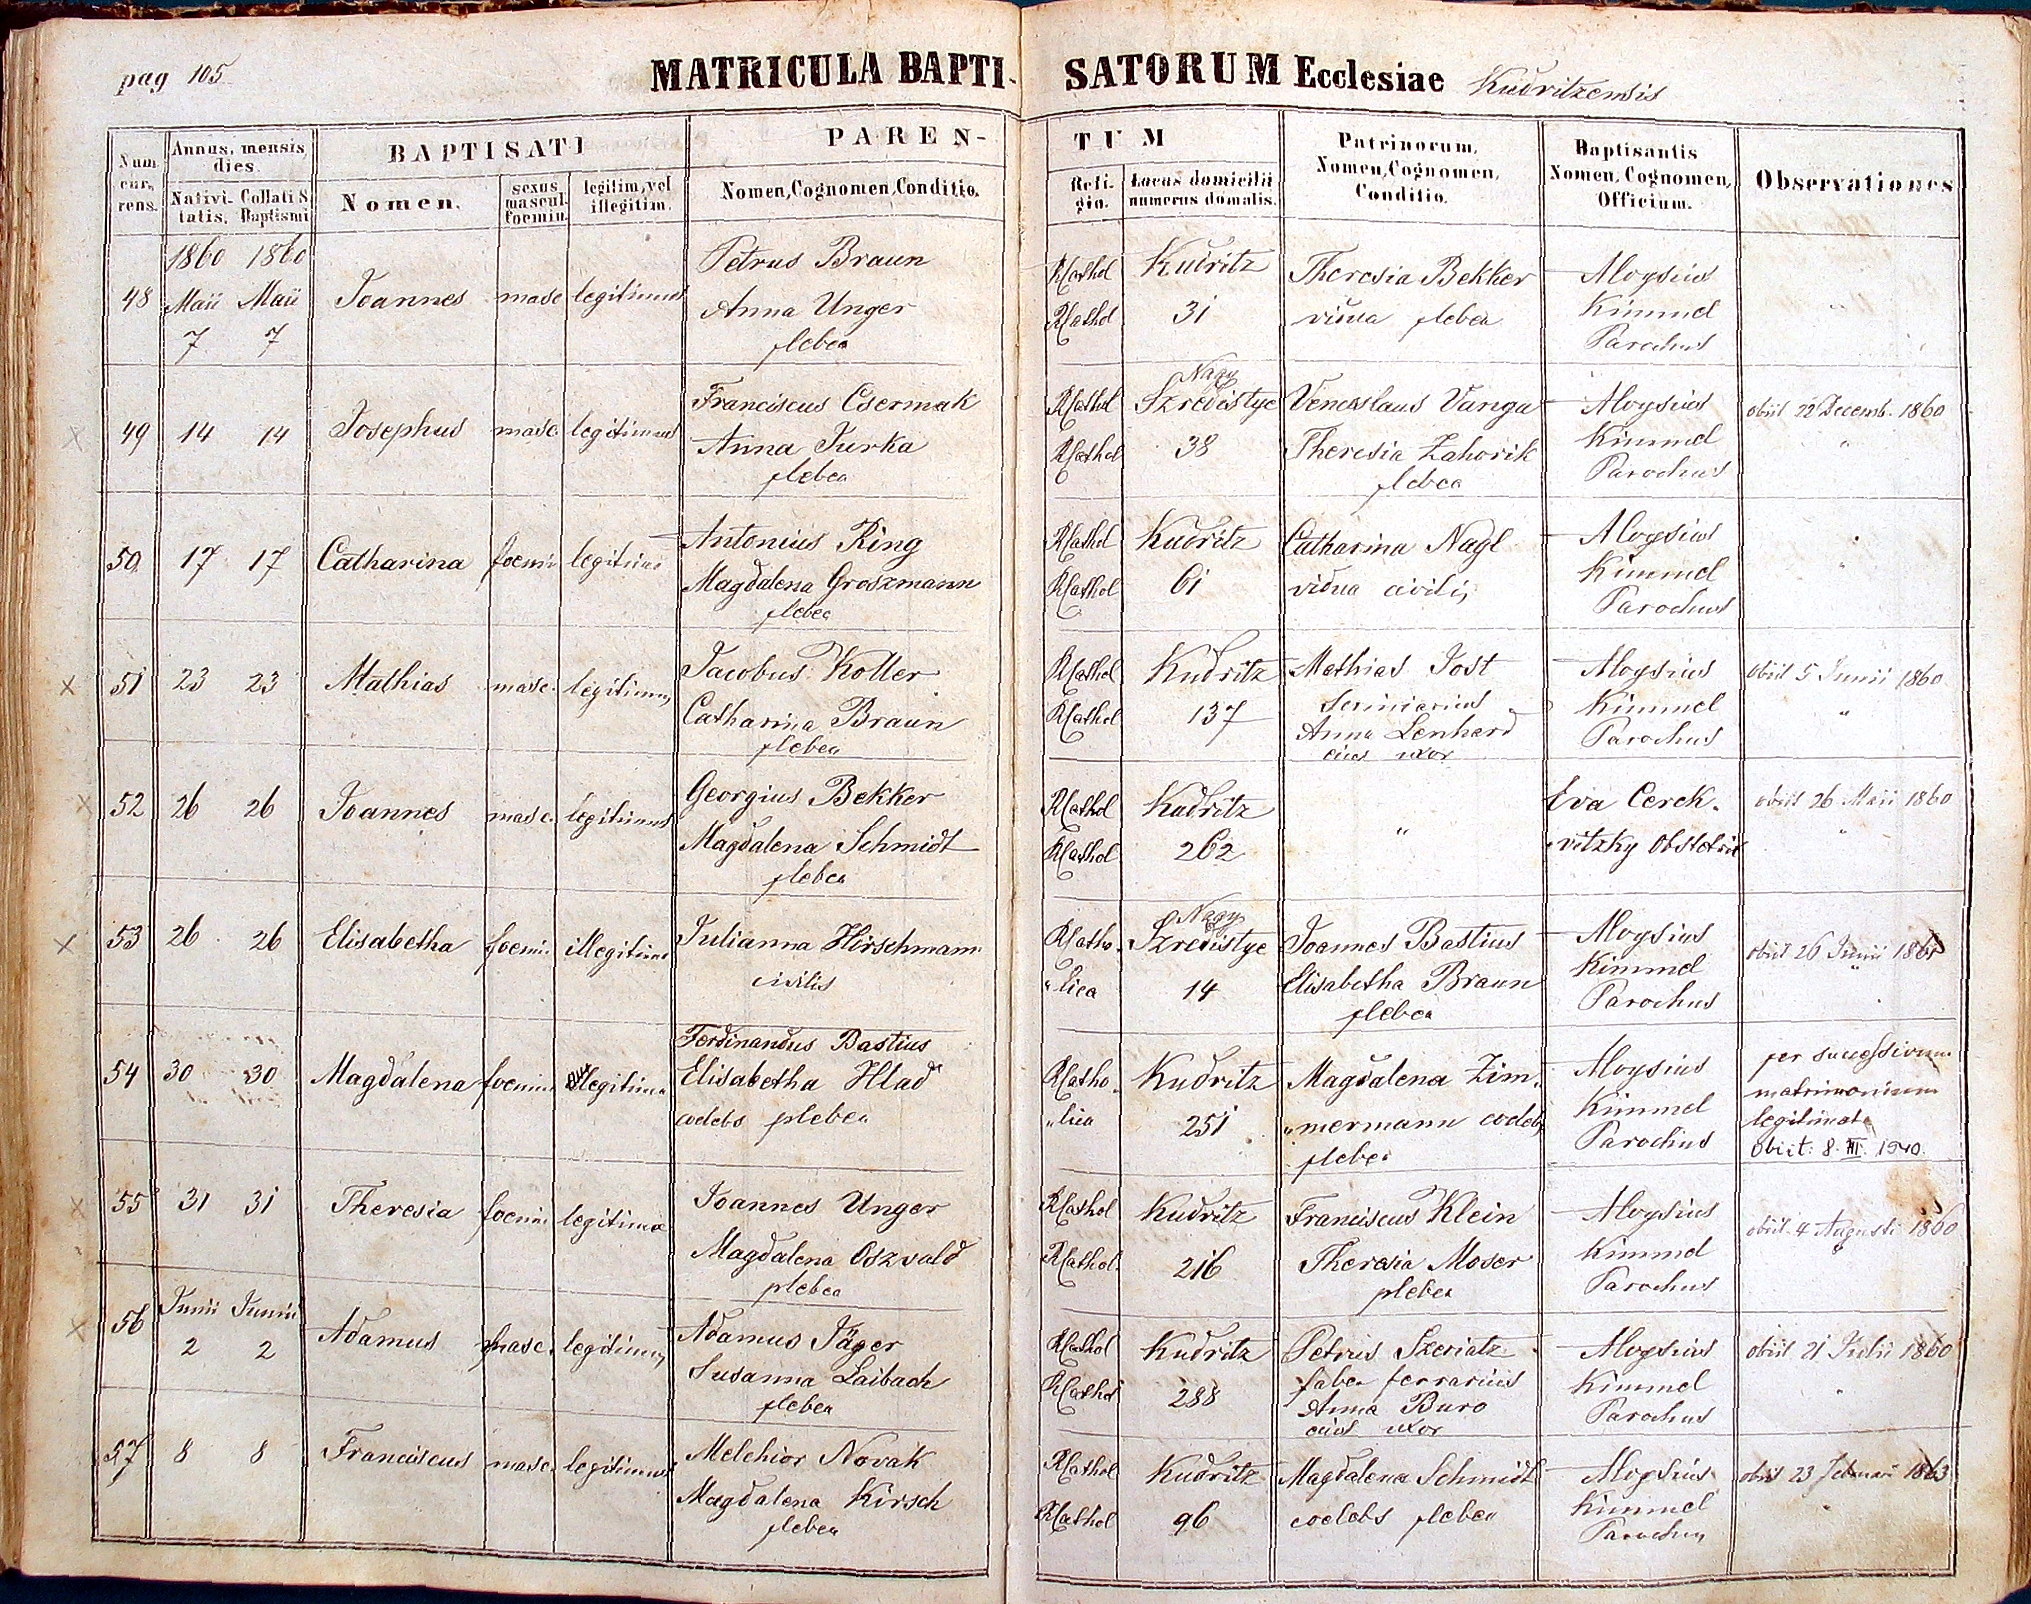 images/church_records/BIRTHS/1852-1870B/105